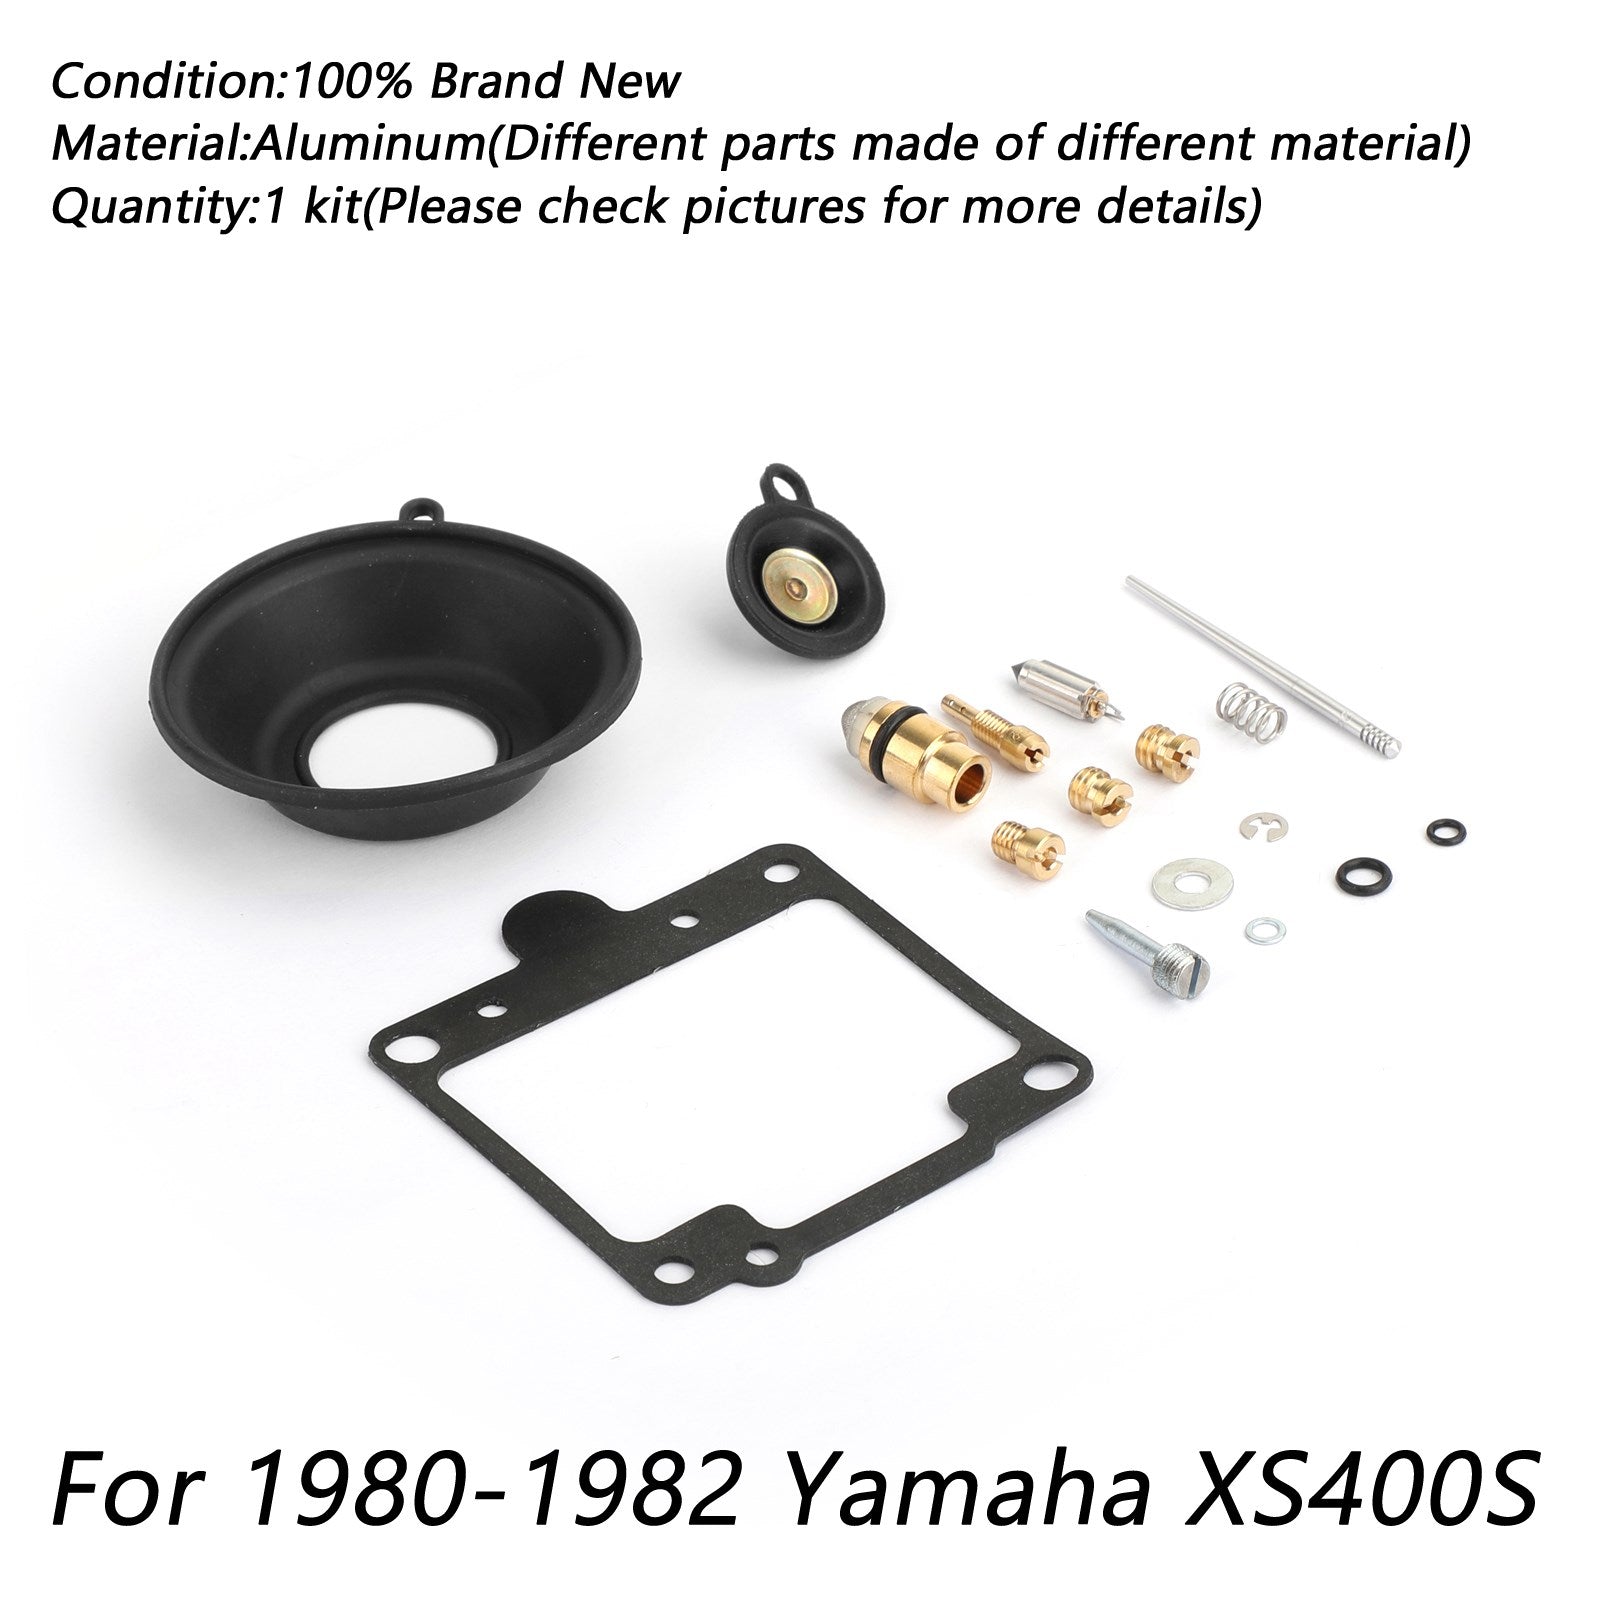 2x Vergaser-Reparatur-Umbausatz für Yamaha XS400 SE Special 1980-1982 1981 Neu